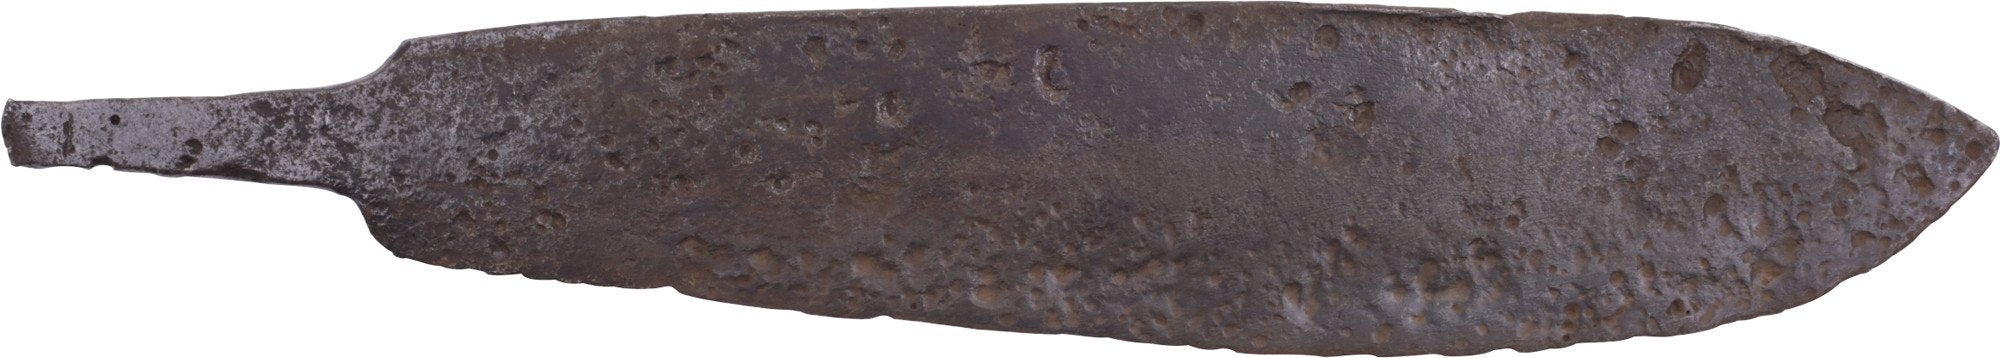 FINE VIKING SCRAMSEAX, C.900-1000 AD - Fagan Arms